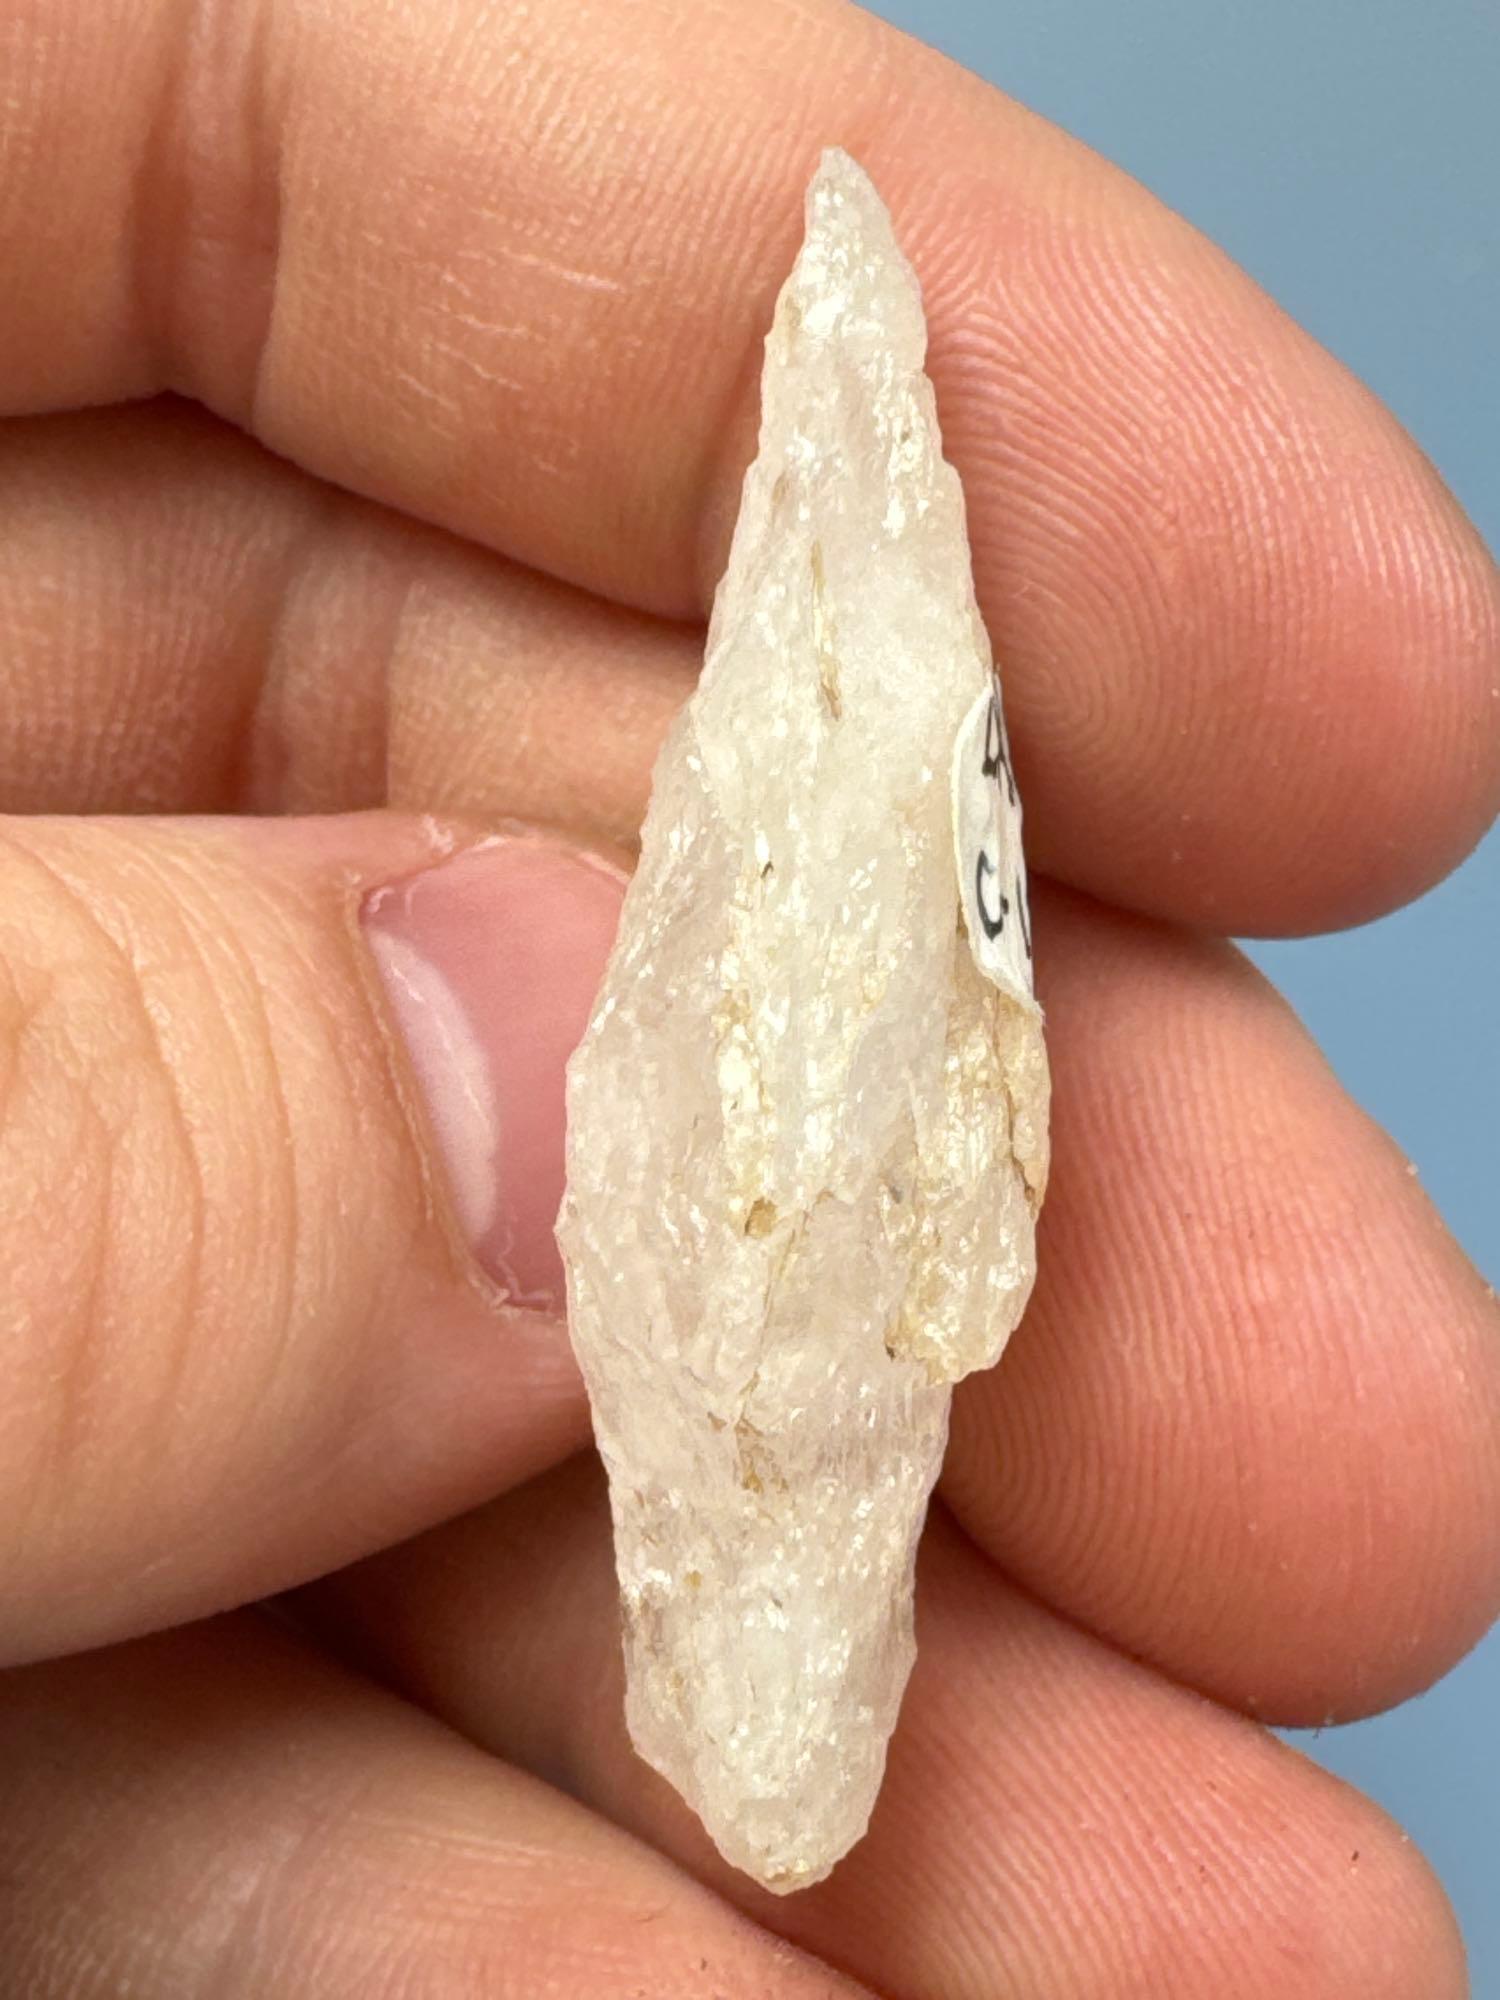 1 3/4" Quartz Crystalline Archaic Stem Bare Island Point, Found in Lancaster Co., PA